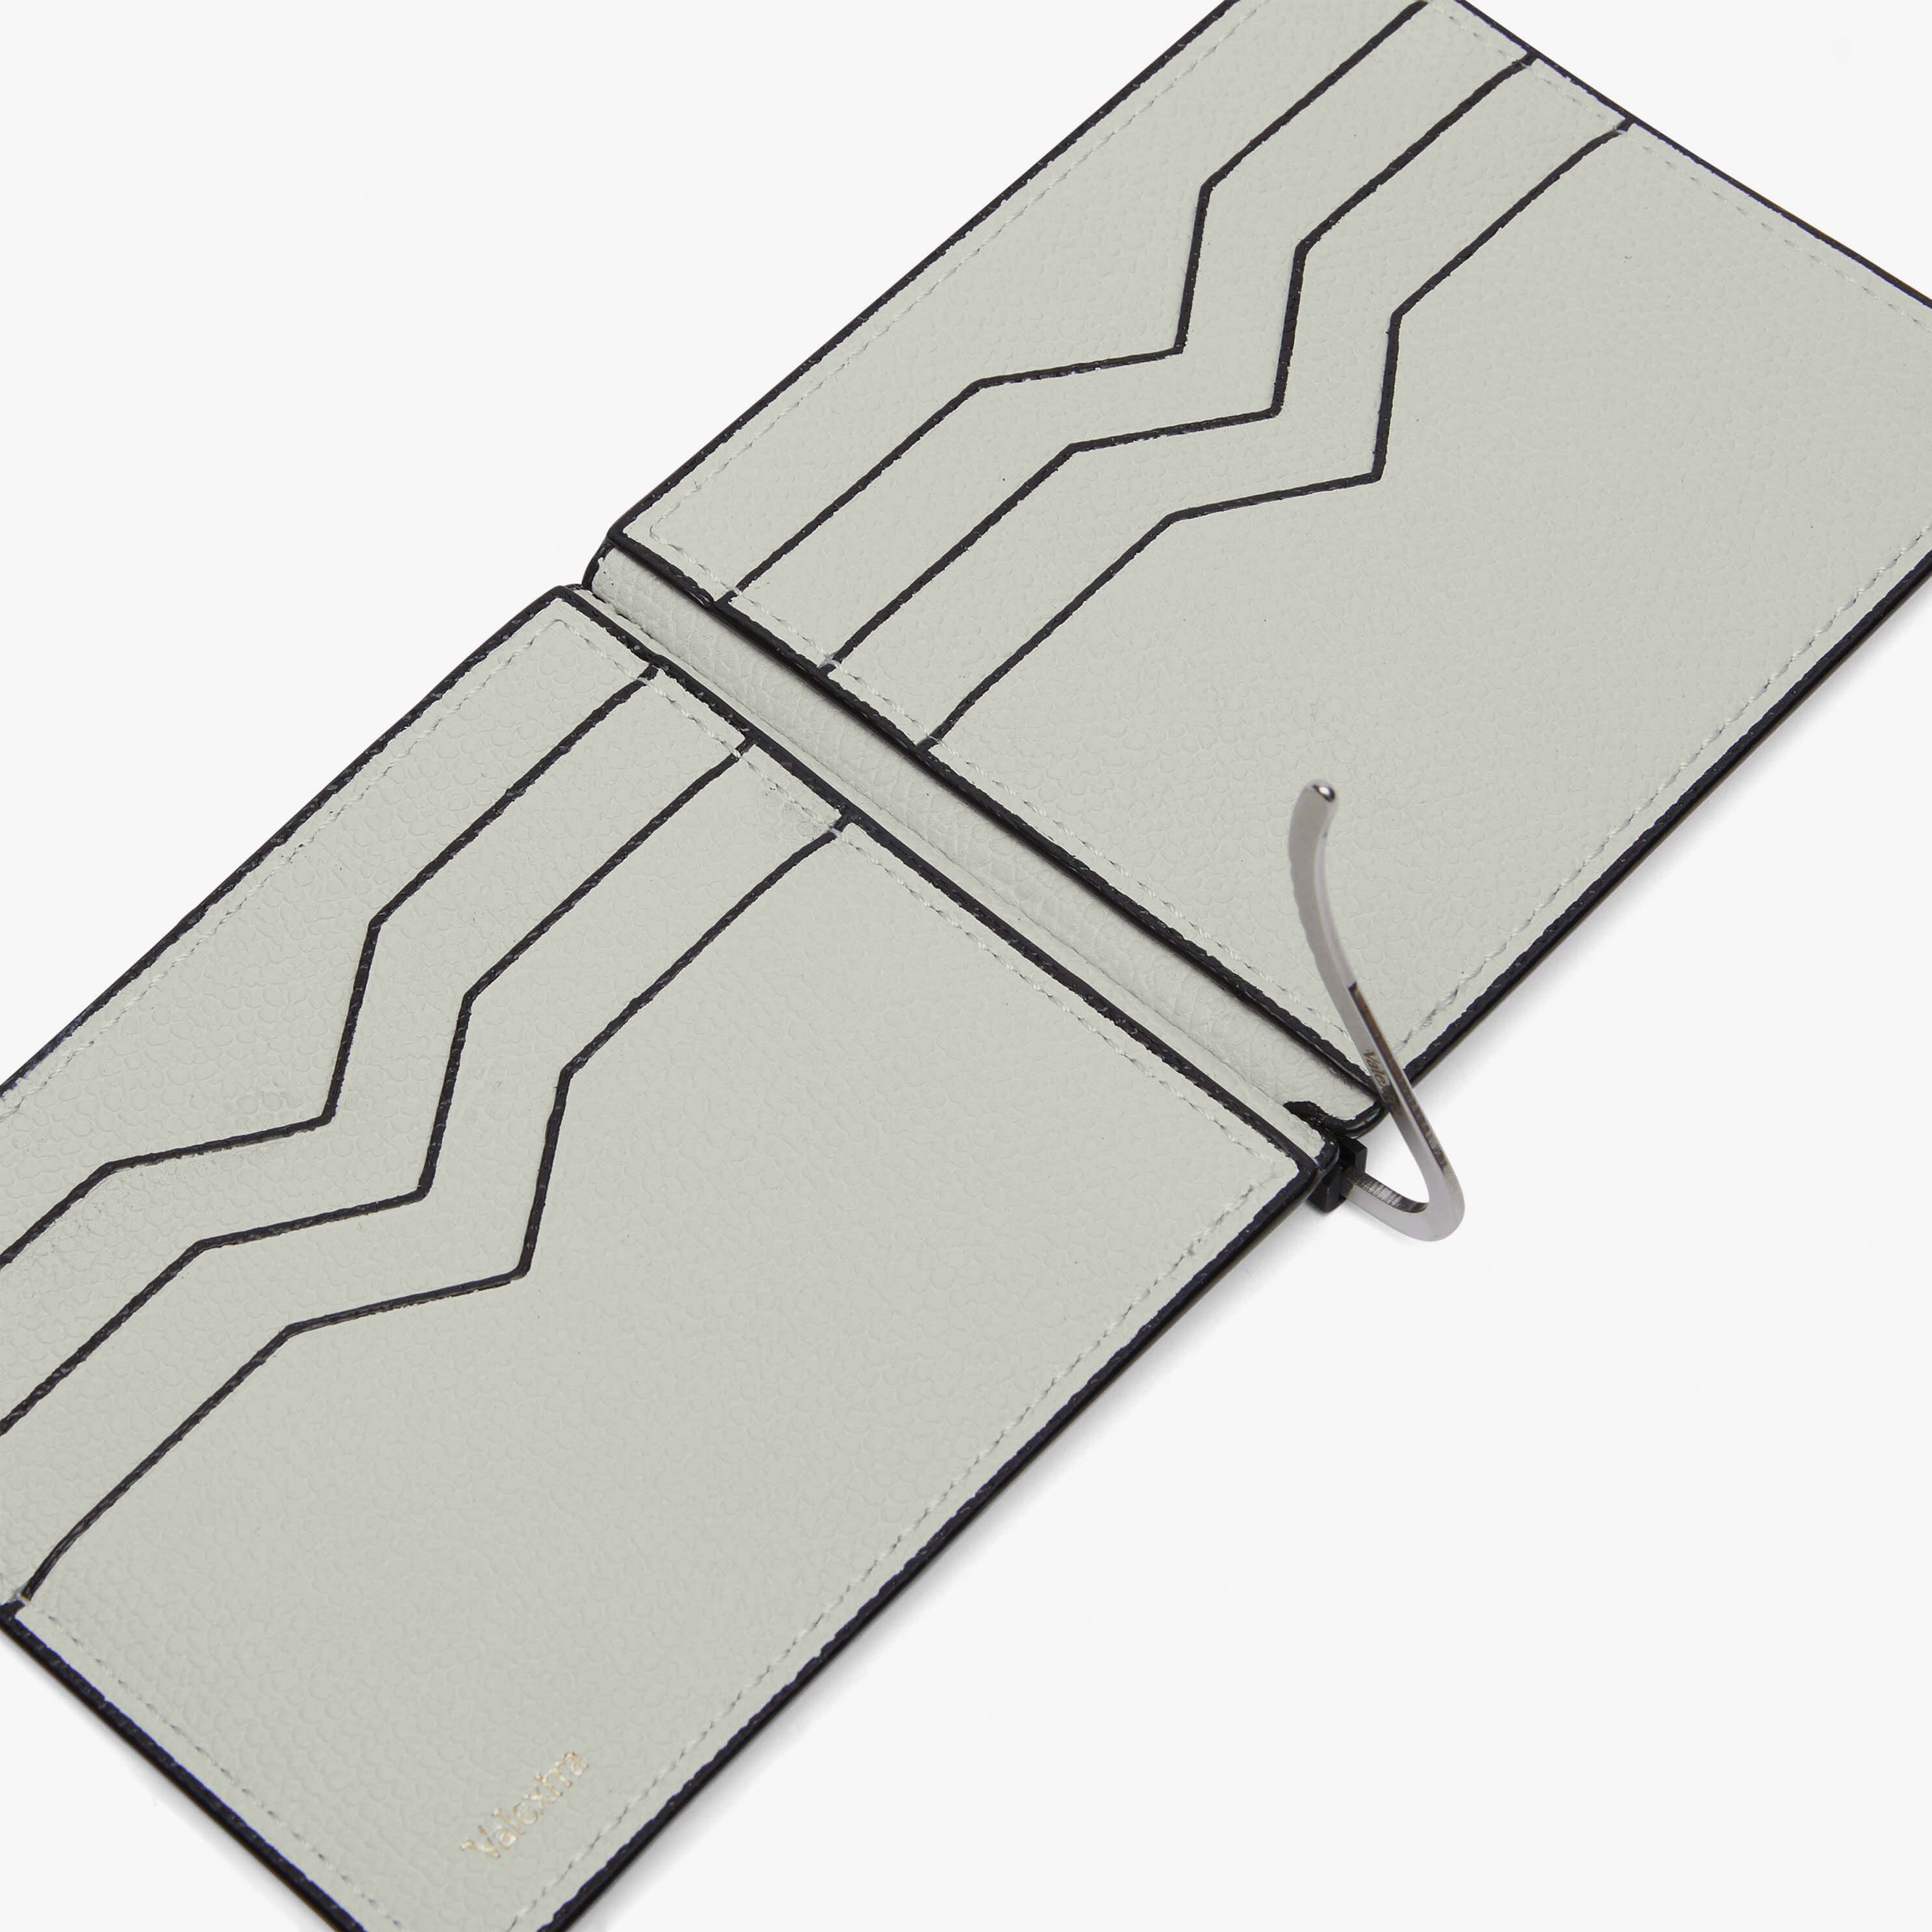 Women's leather minimalist wallets: Small, bifold, zip | Valextra